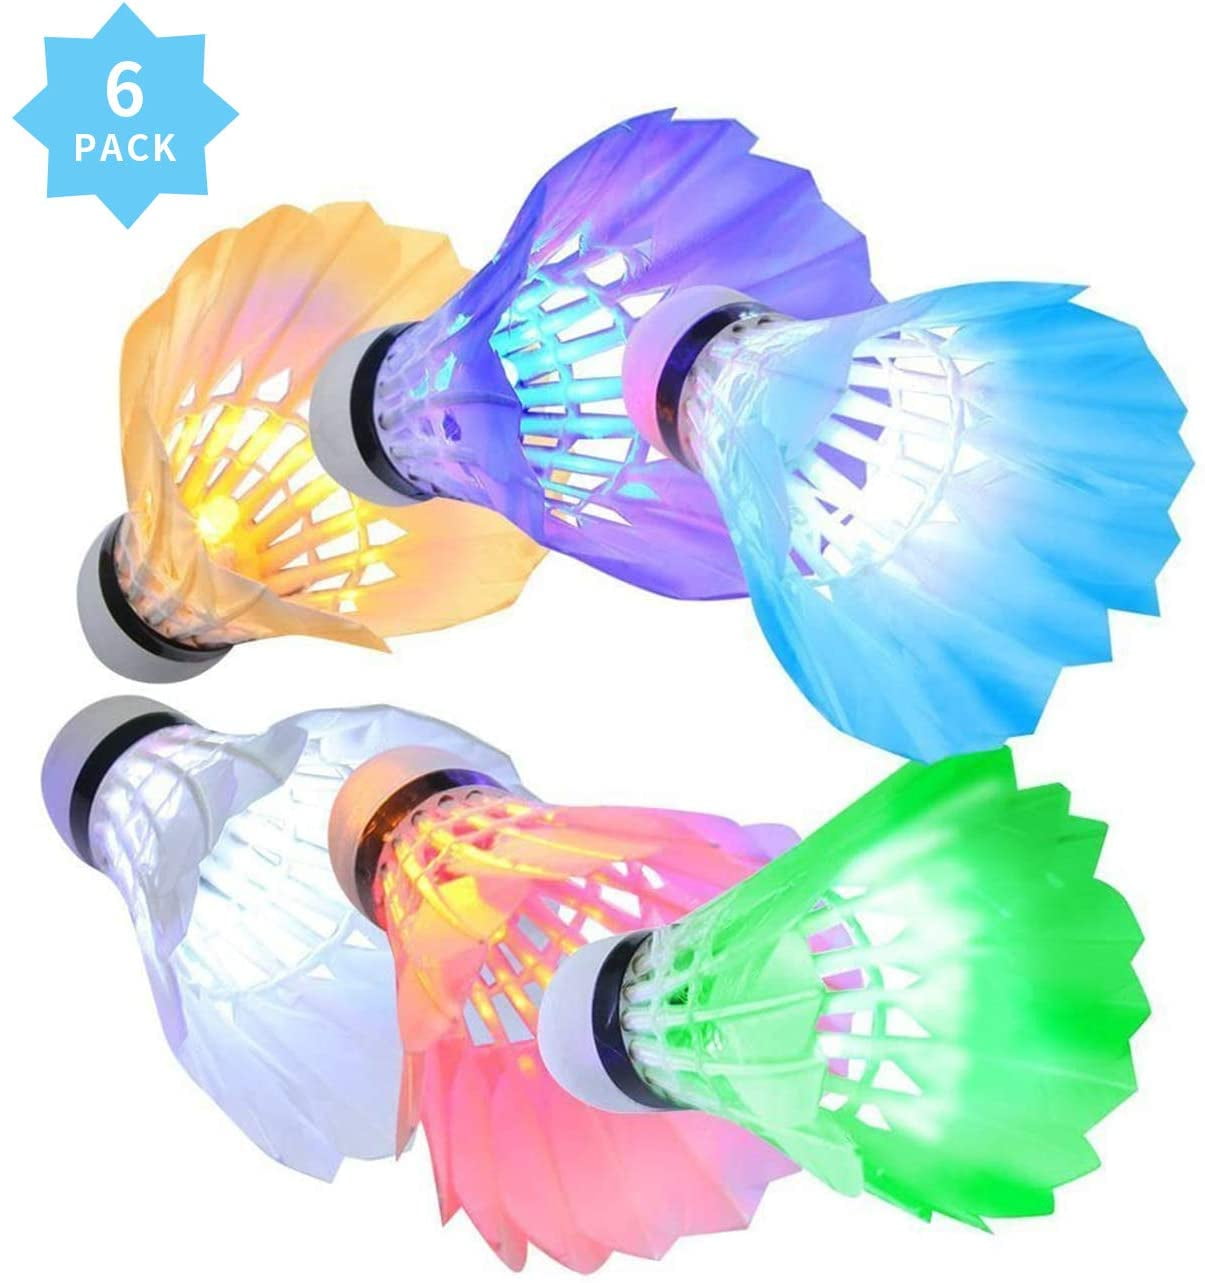 5pcs Novelty LED Glowing Badminton Sports Night Light-up Birdies Shuttlecocks US 